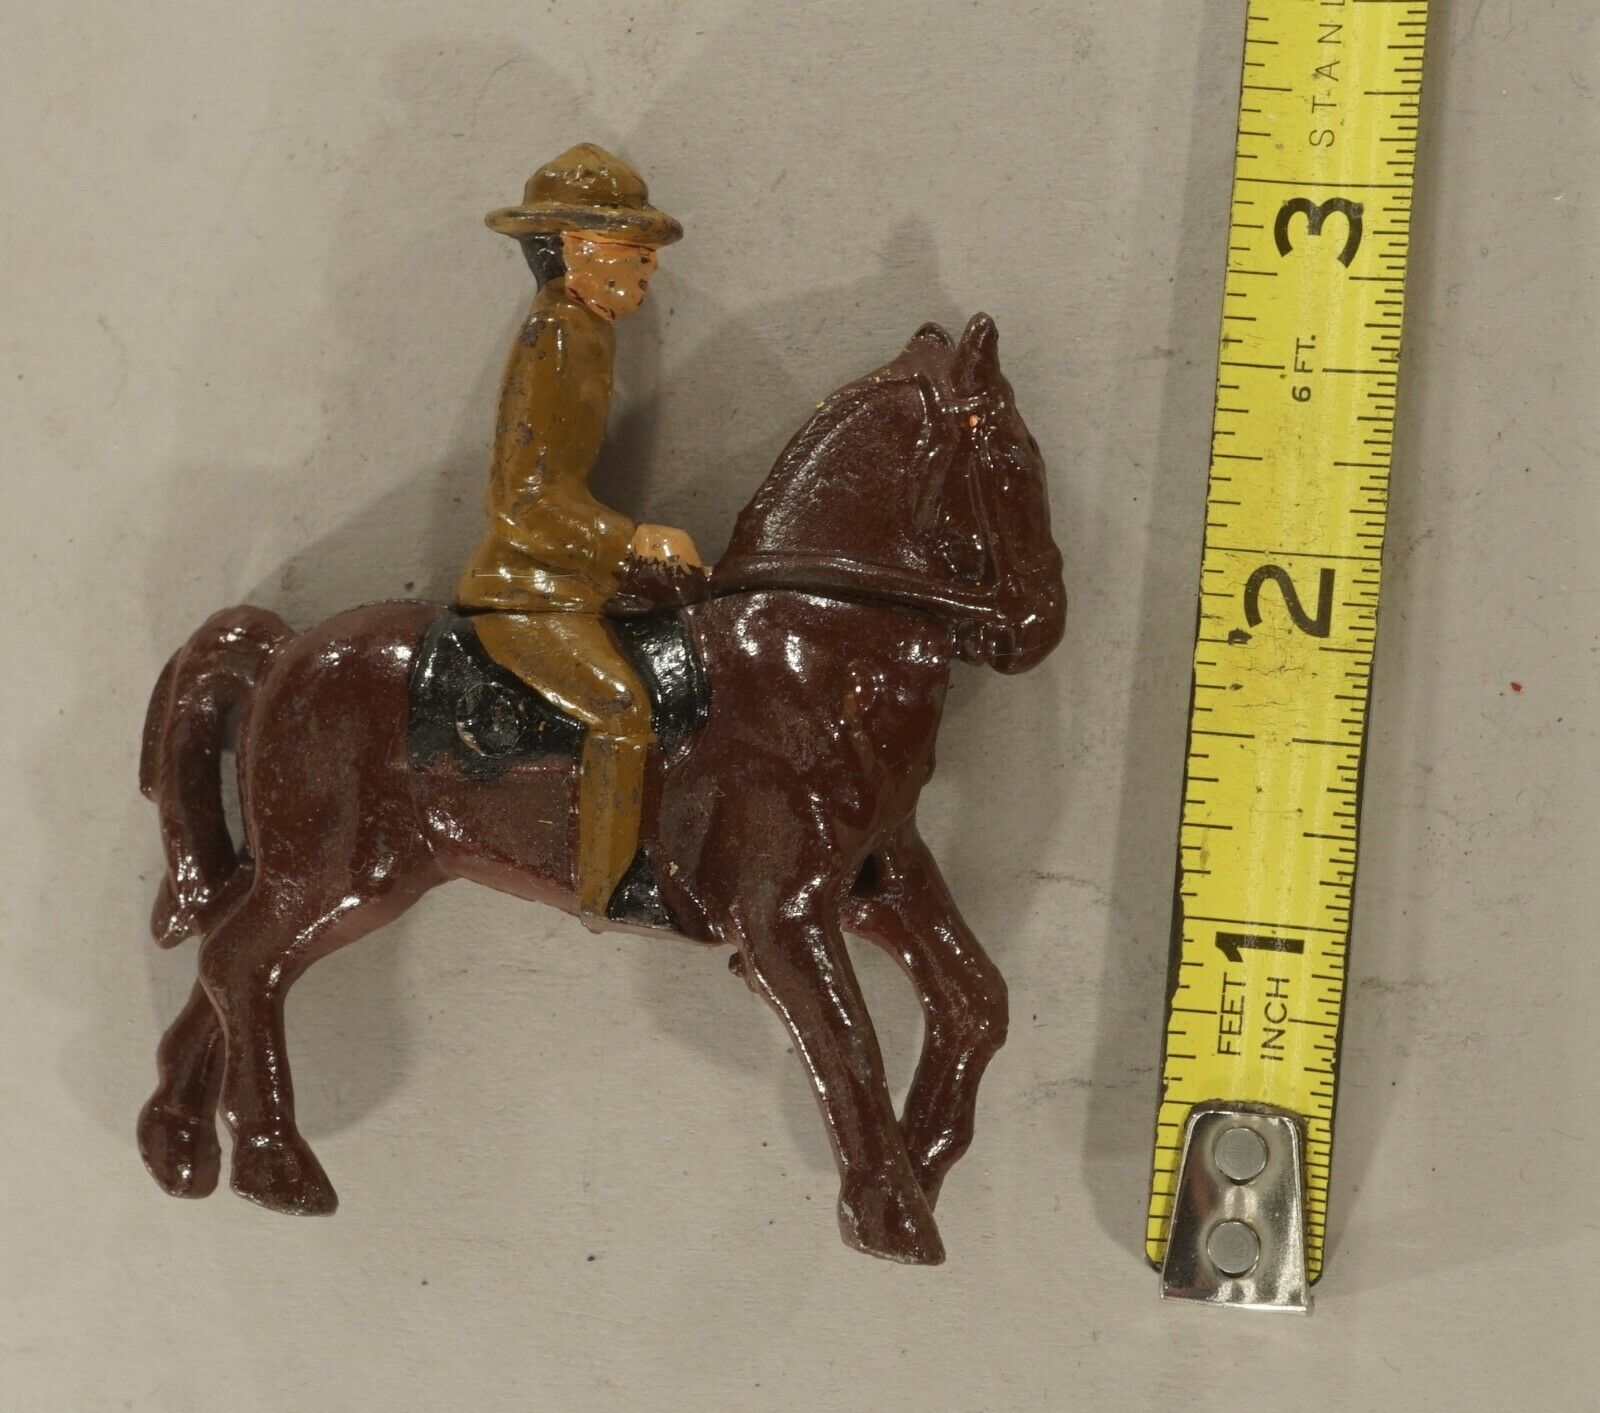 Original Vintage Antique Toy Rider On Horse Lead Figure (inventory No. 9242)